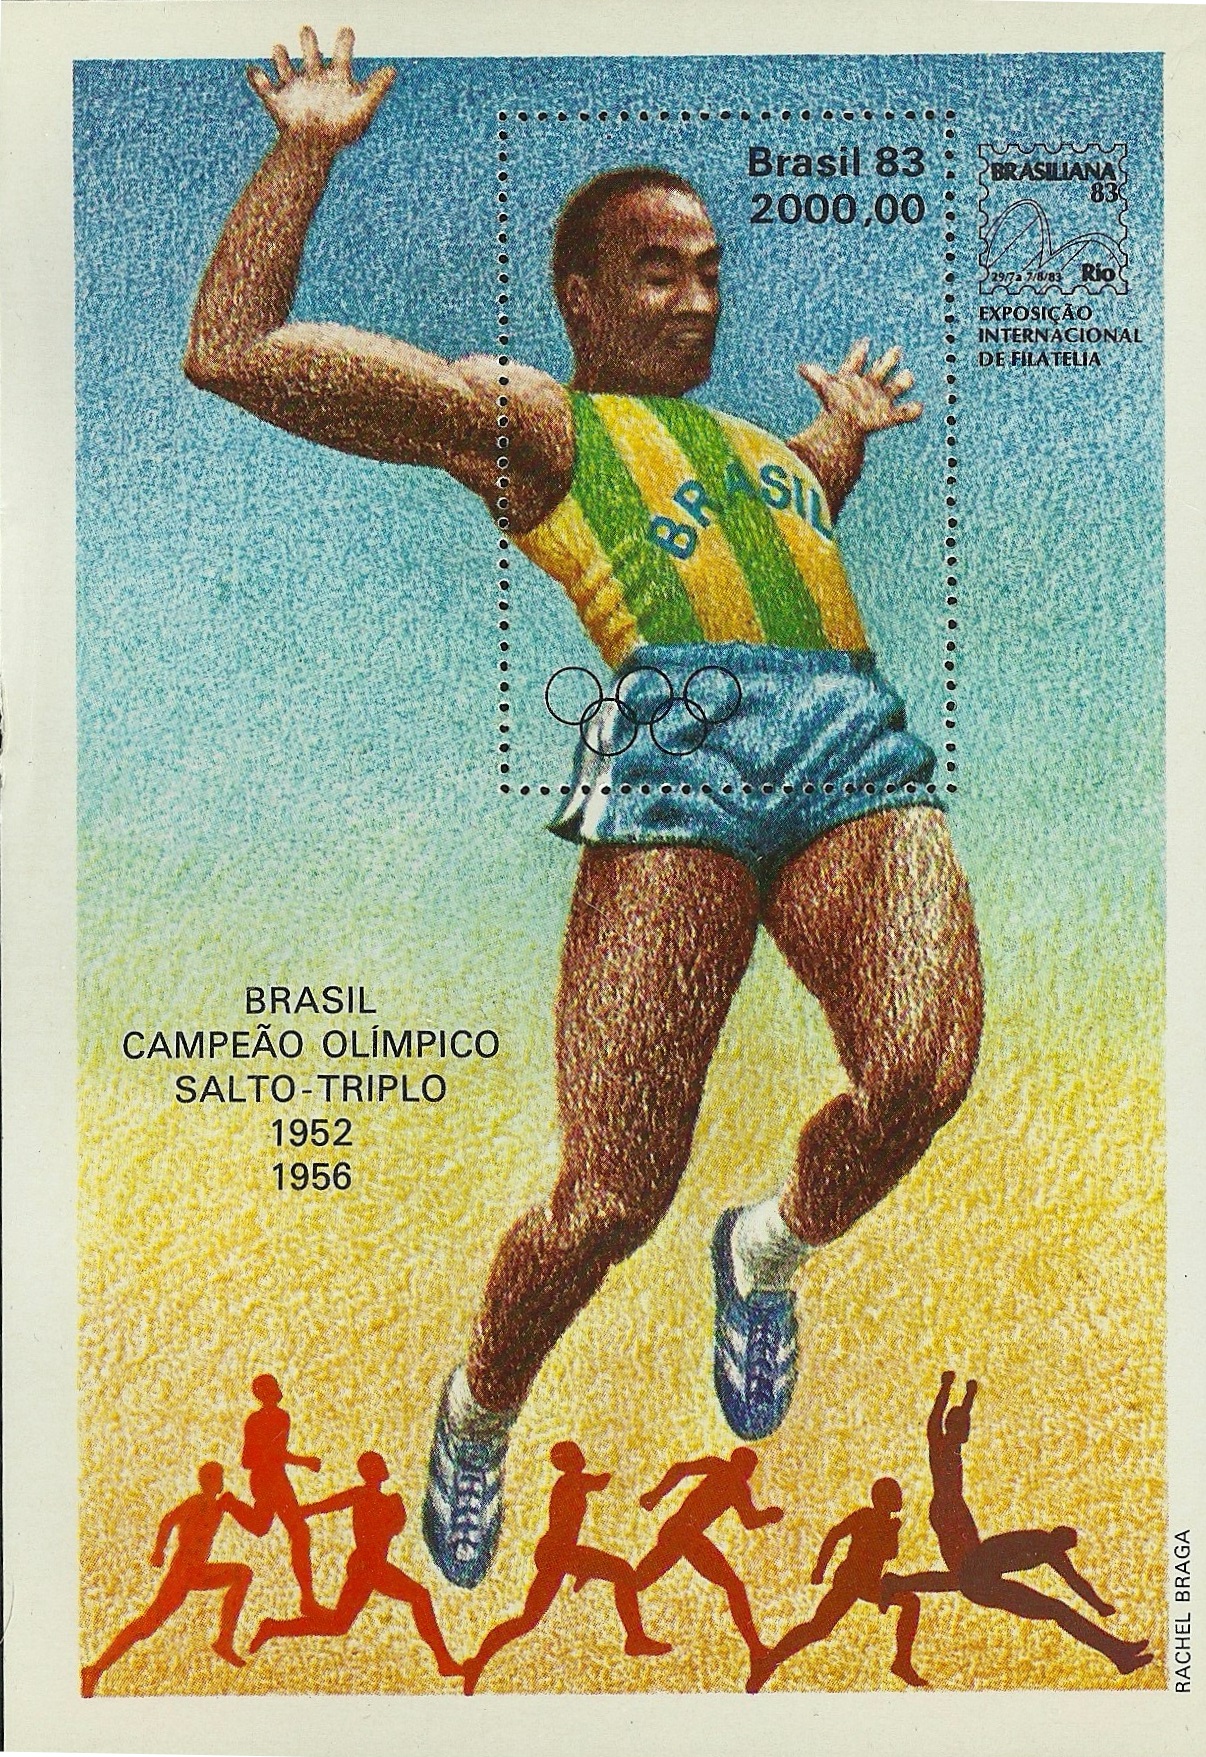 Brazil 1956 FDC First Day Cover "VIII Jogos Da Primavera"